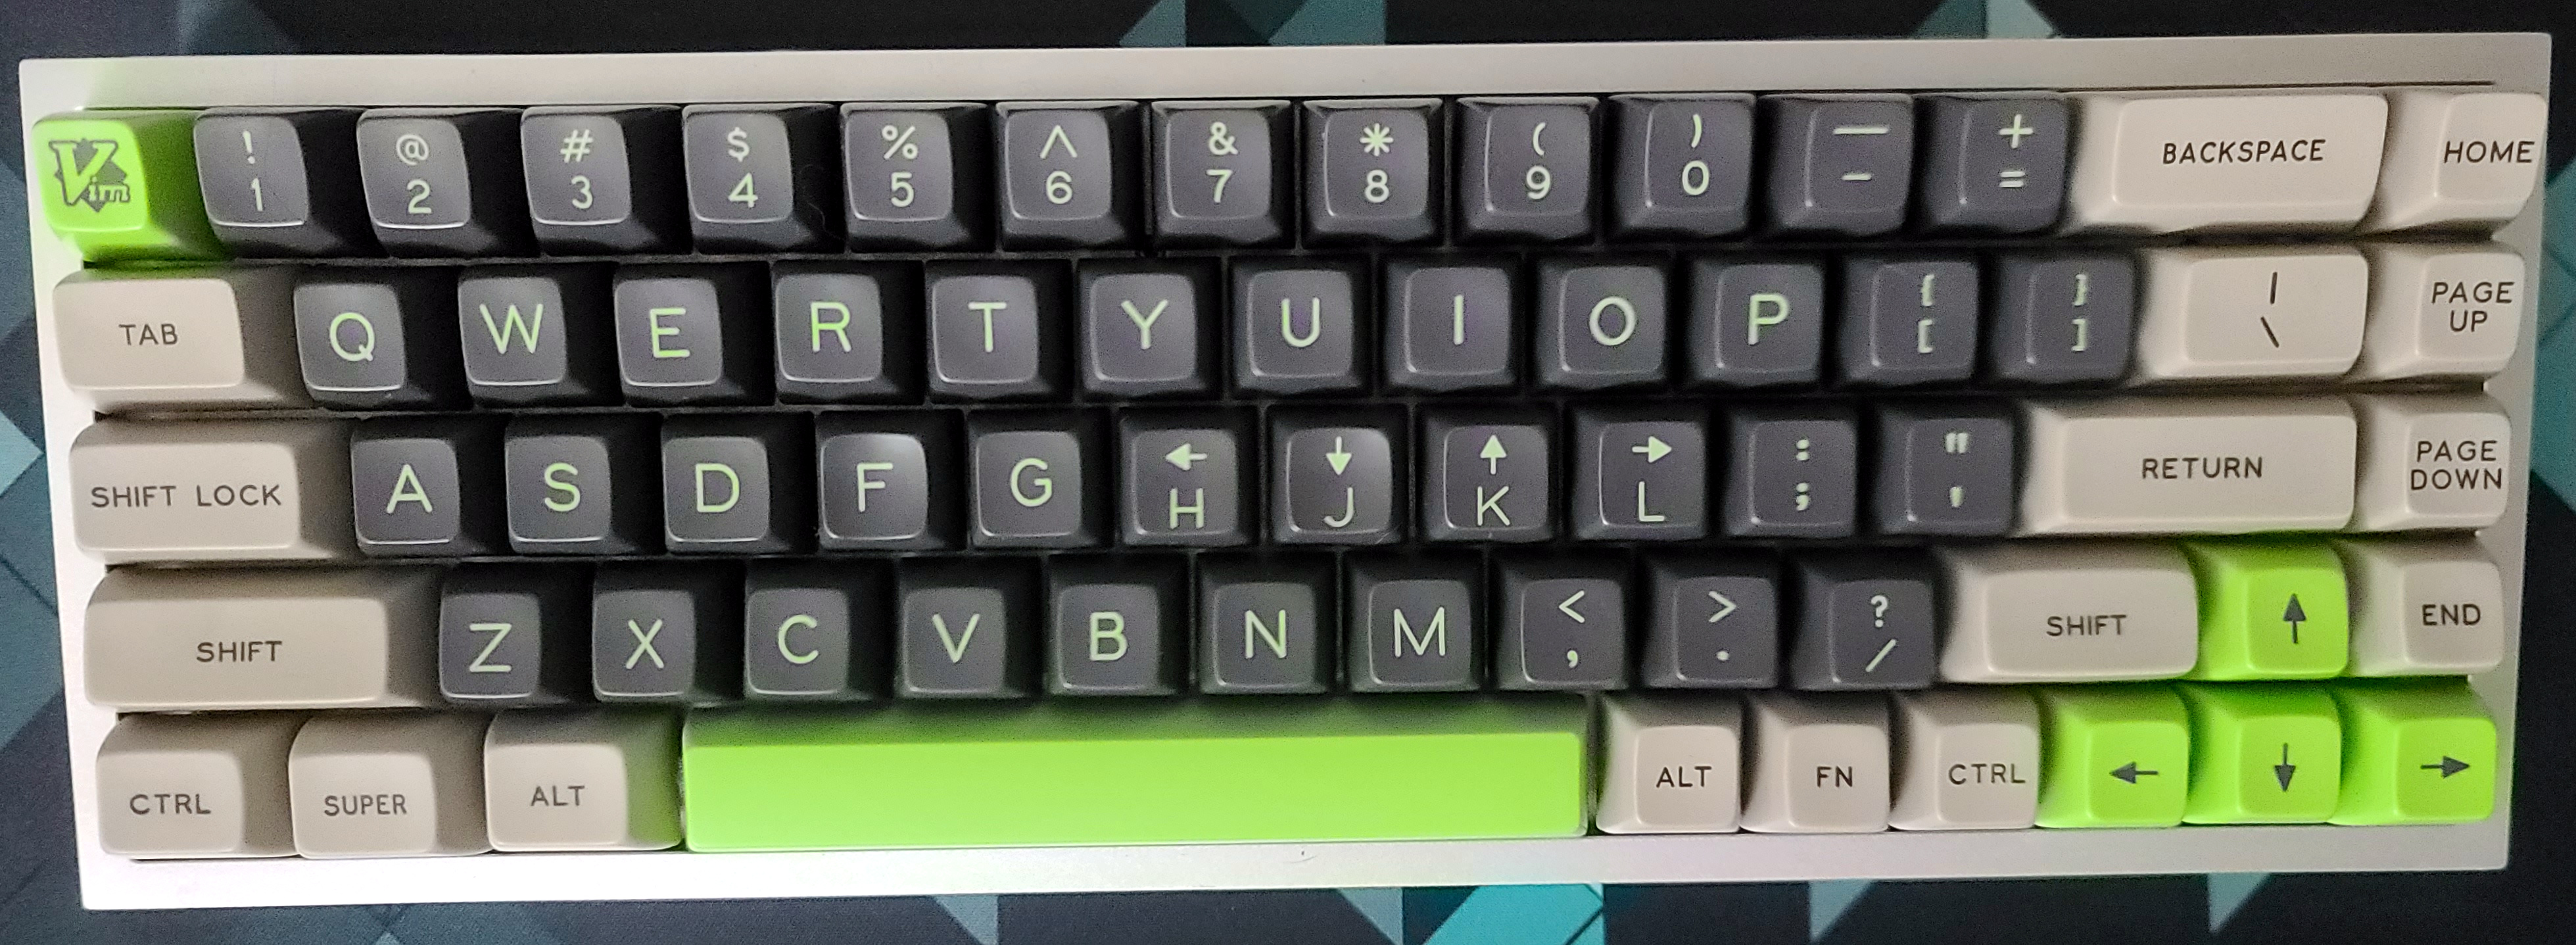 NK65 Keyboard